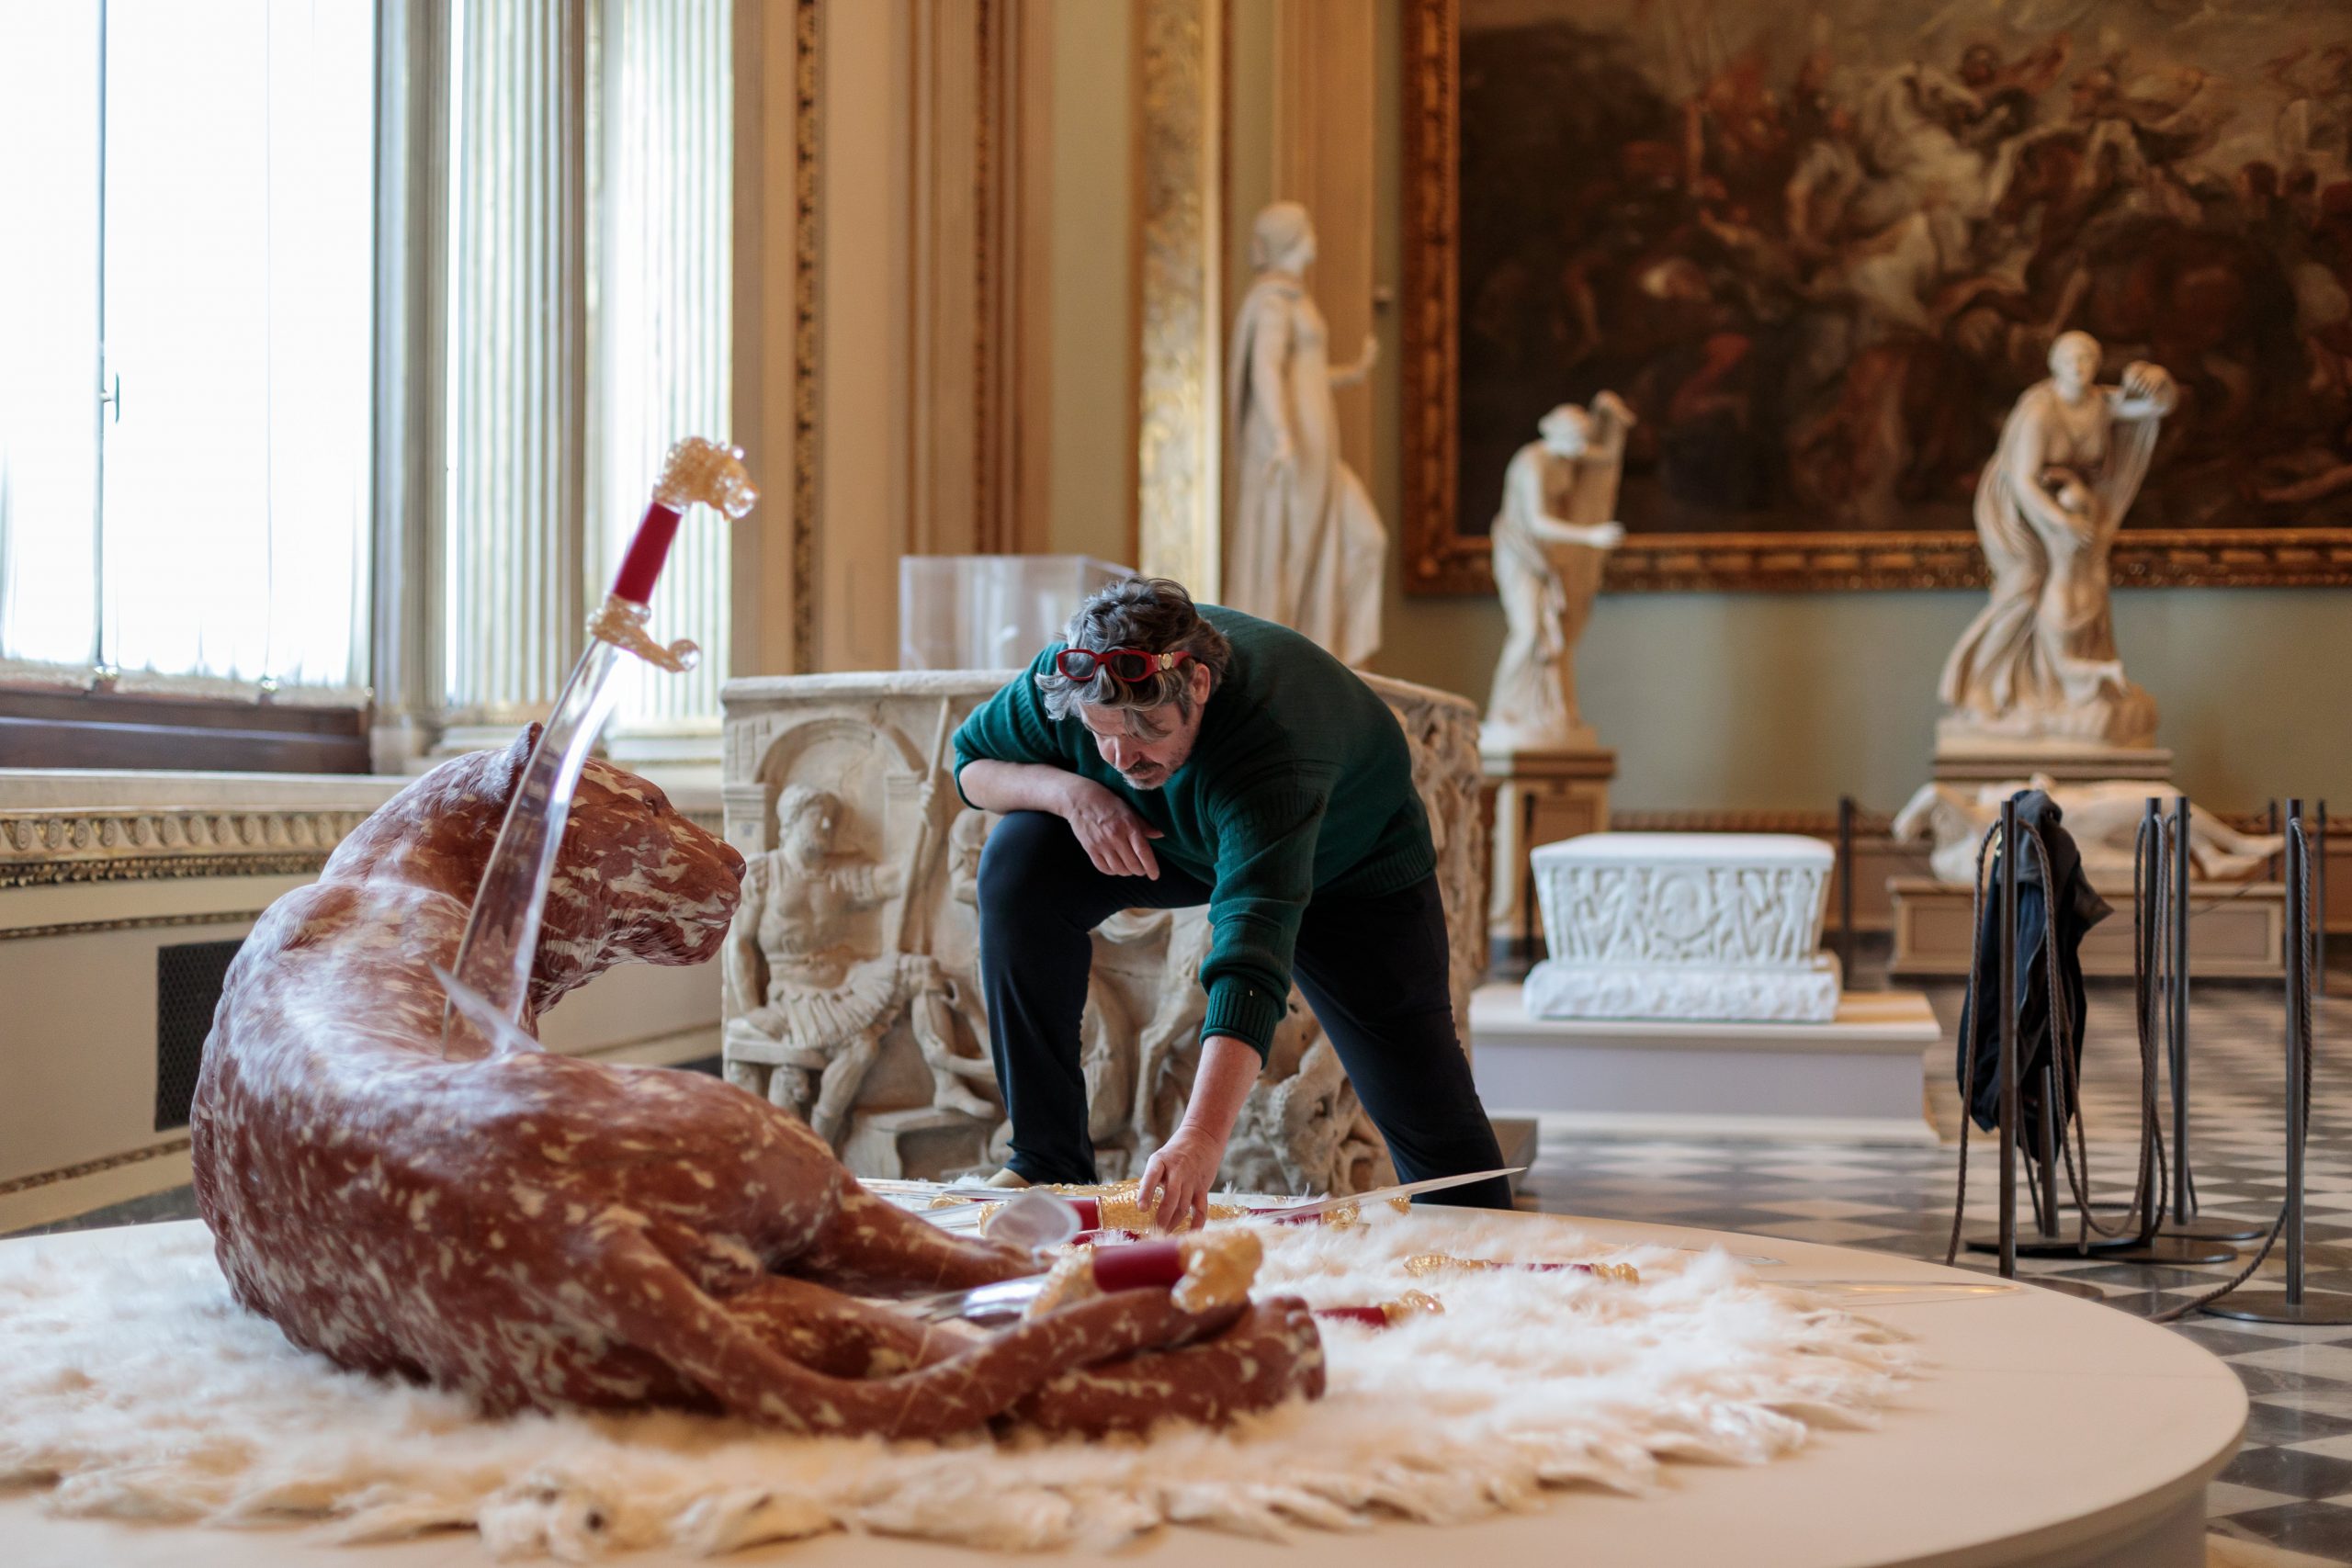 Koen Vanmechelen installing his artworks at the exhibition Seduzione, Gallerie degli Uffizi